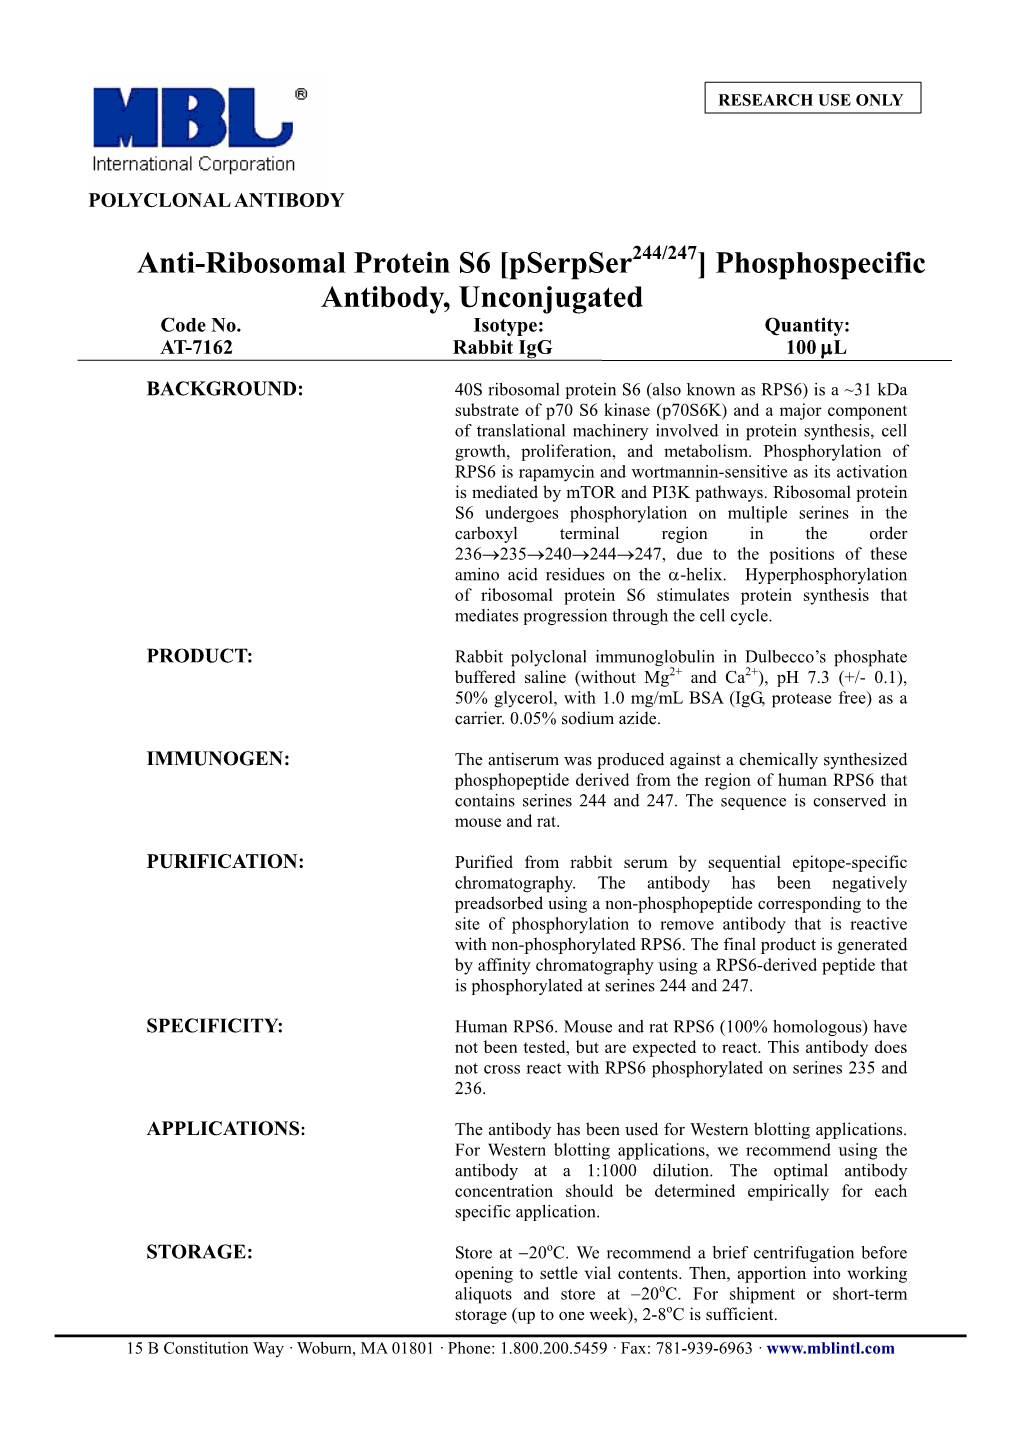 Anti-Ribosomal Protein S6 [Pserpser ] Phosphospecific Antibody, Unconjugated Code No